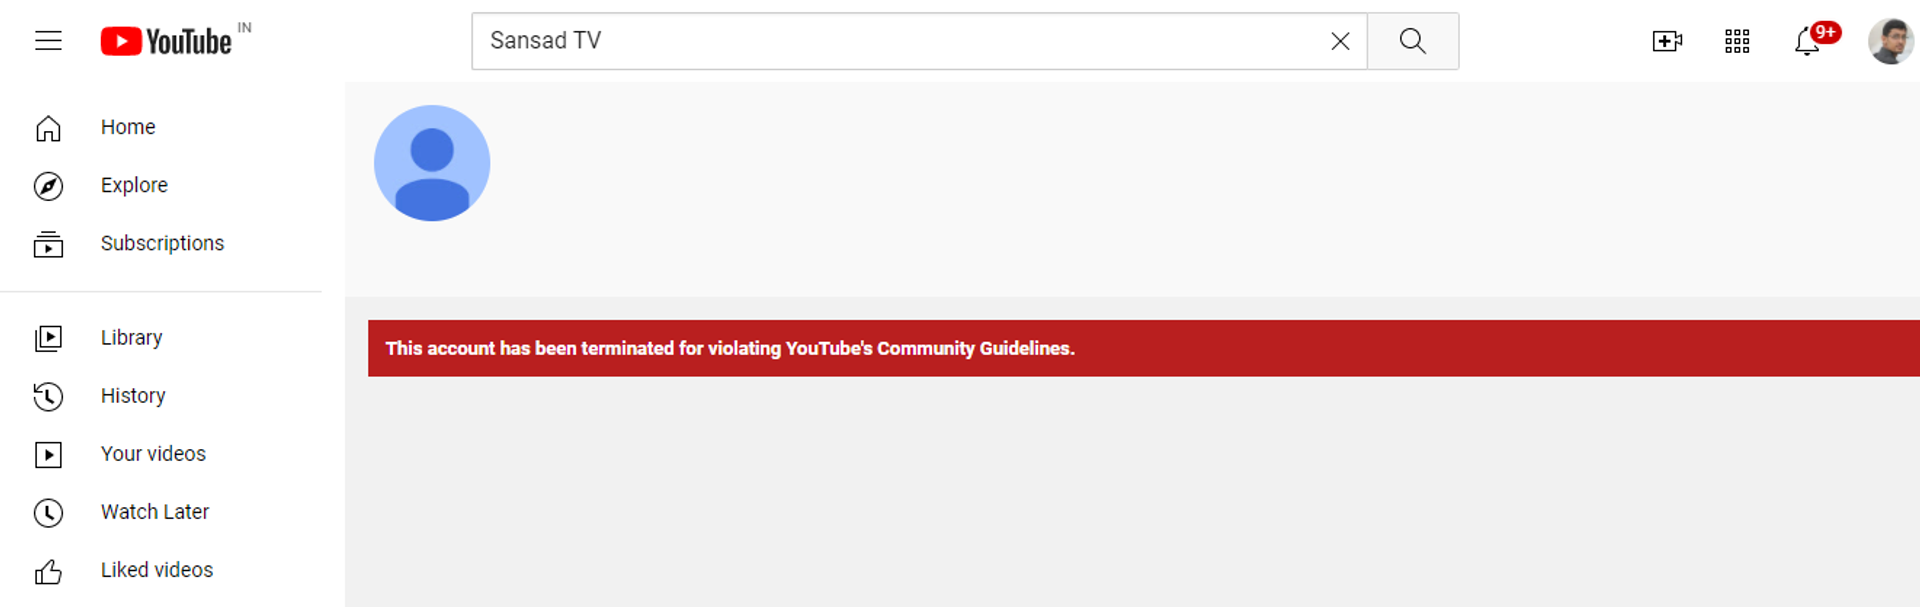 YouTube terminated account of Sansad TV - Sputnik International, 1920, 15.02.2022